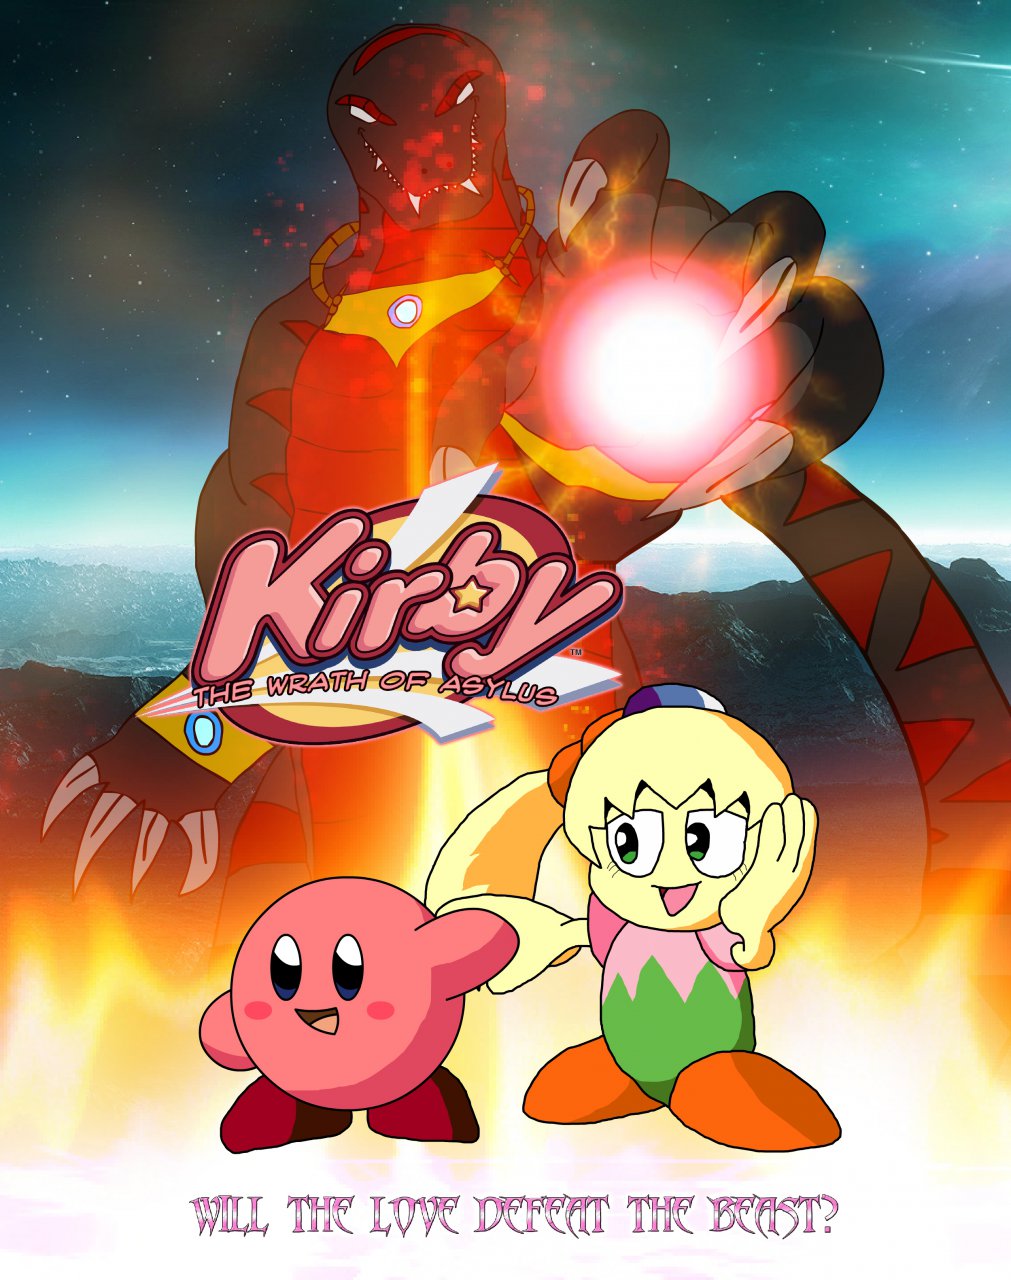 Kirby The Wrath of Asylus Poster by LordAsylus91 -- Fur Affinity [dot] net